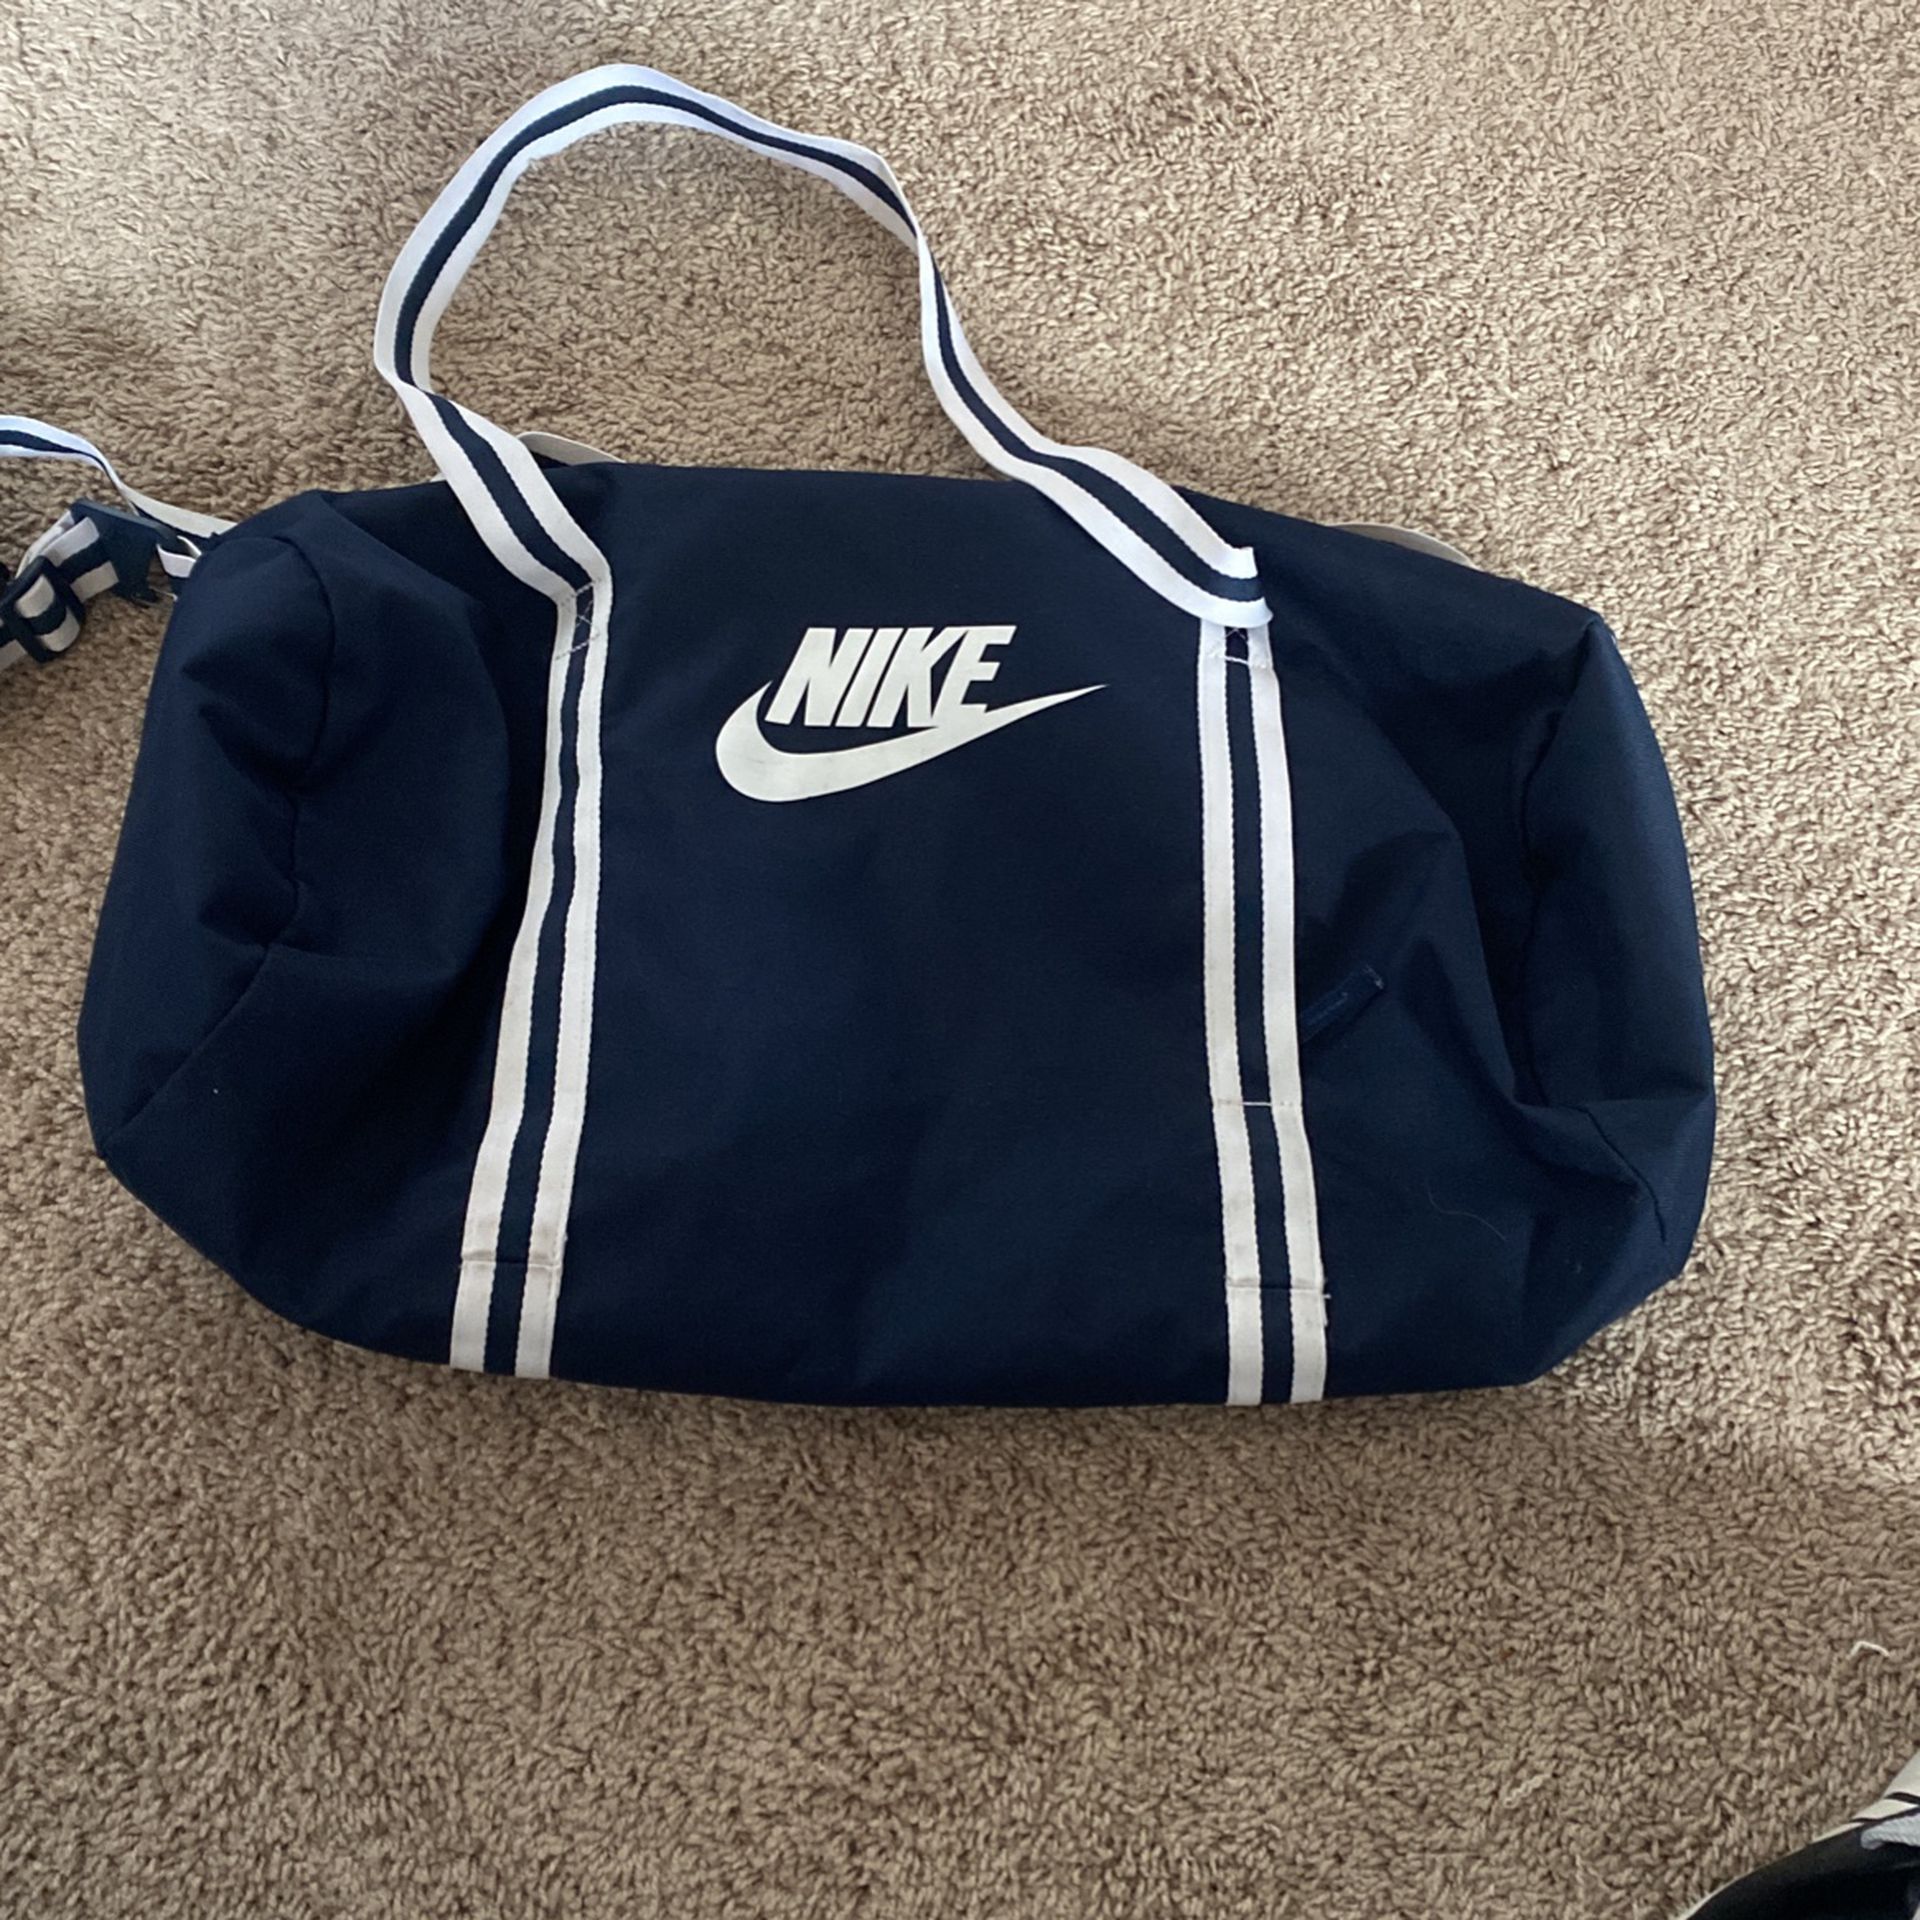 Retro Nike Duffel Bag